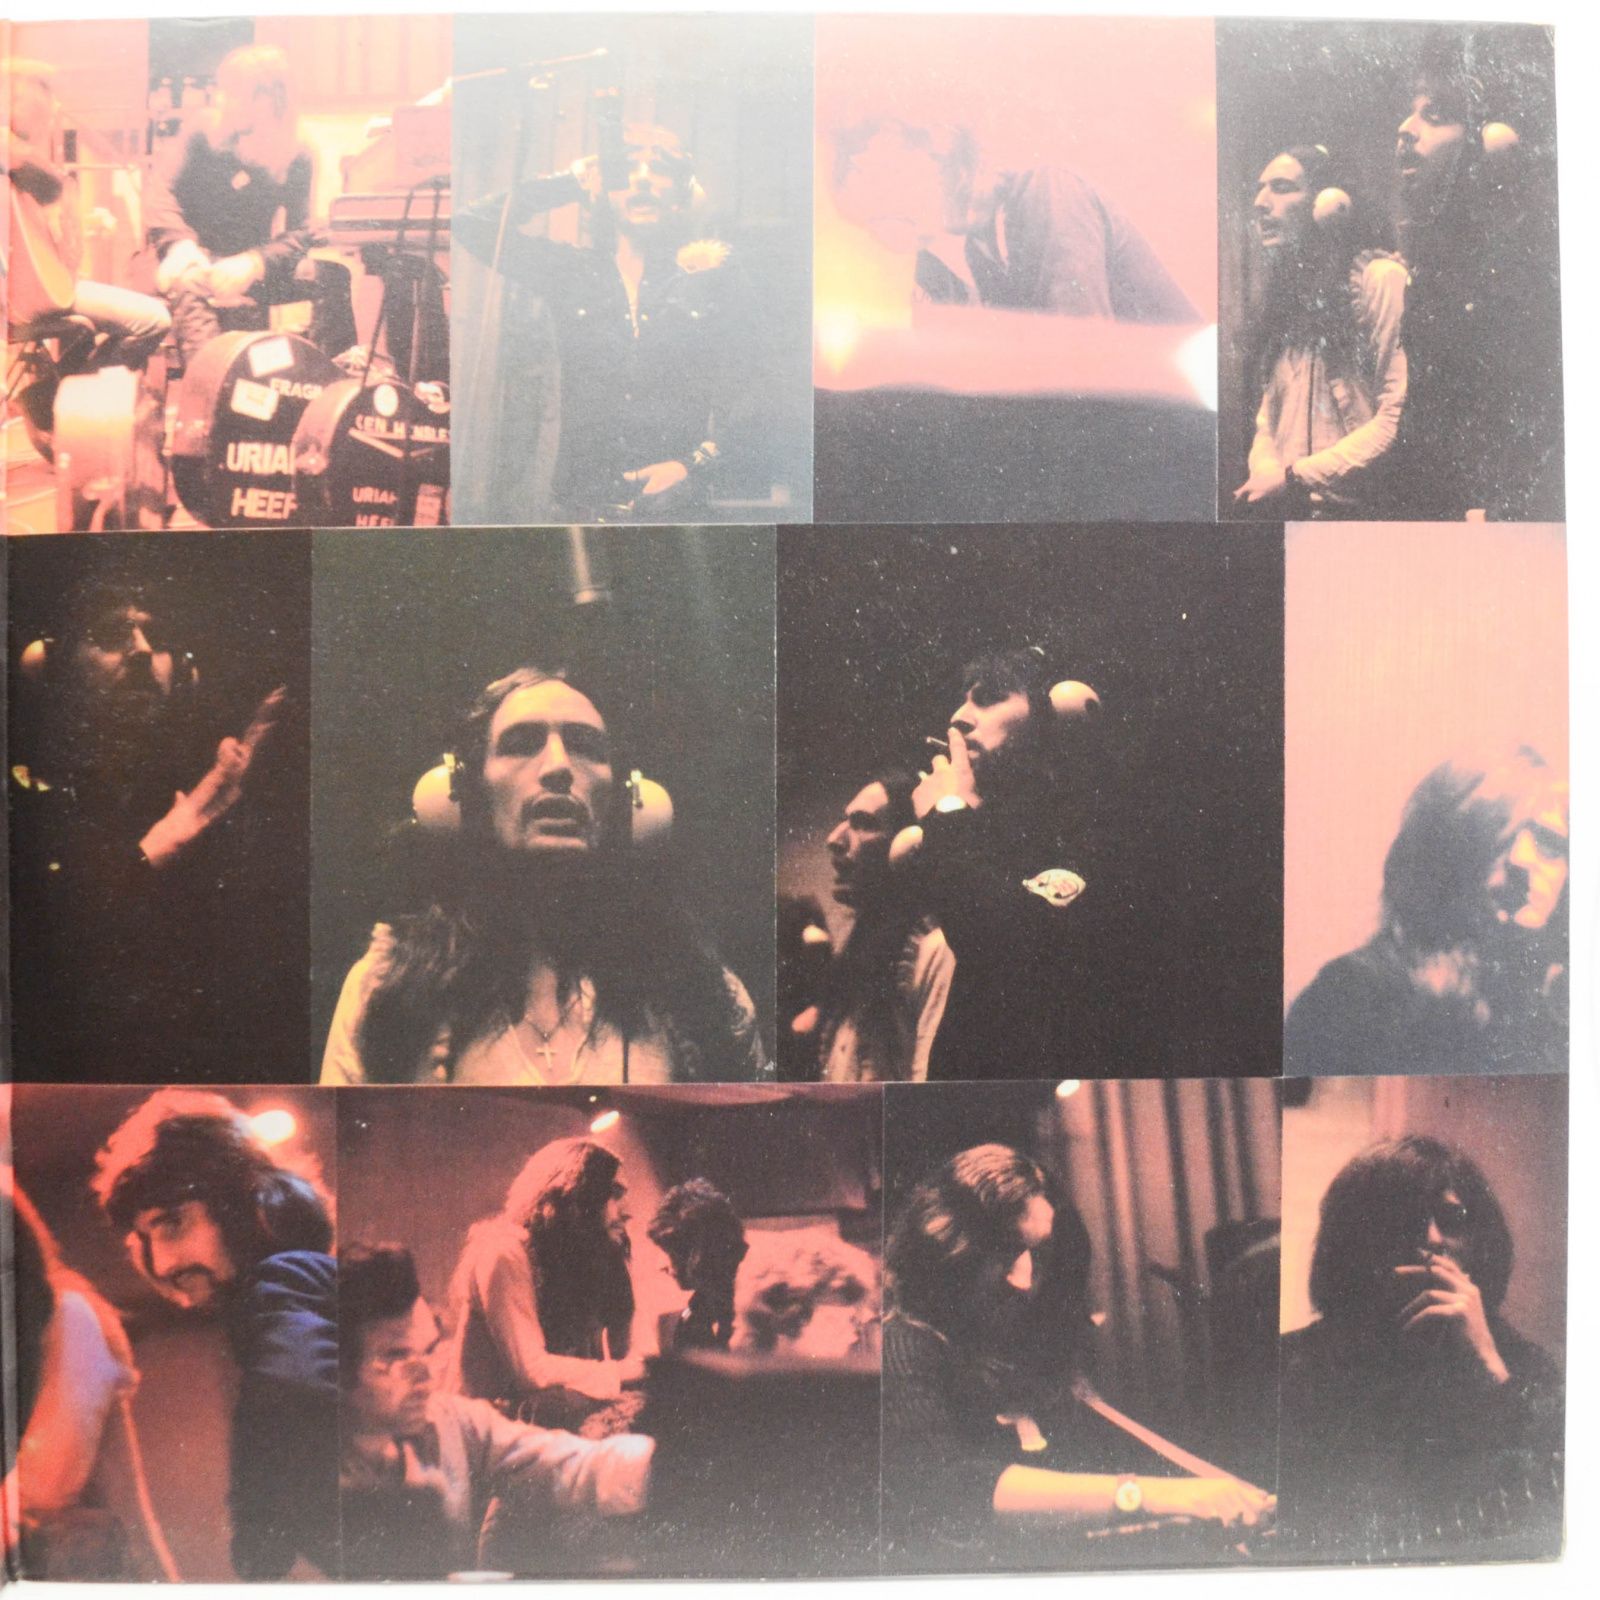 Uriah Heep — Demons And Wizards (UK), 1972